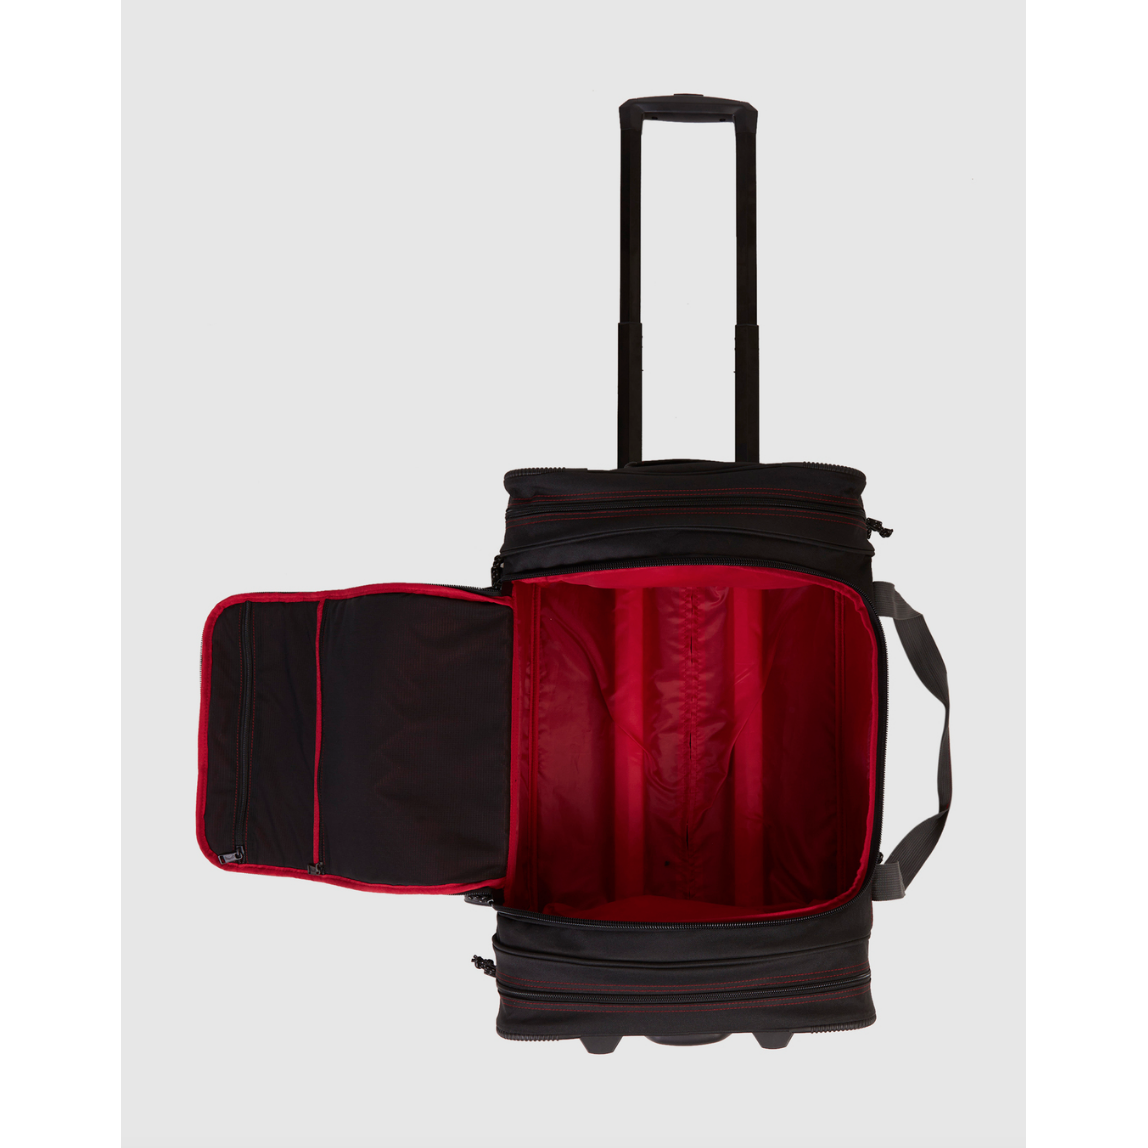 Billabong - Destination Carry On Luggage - Velocity 21